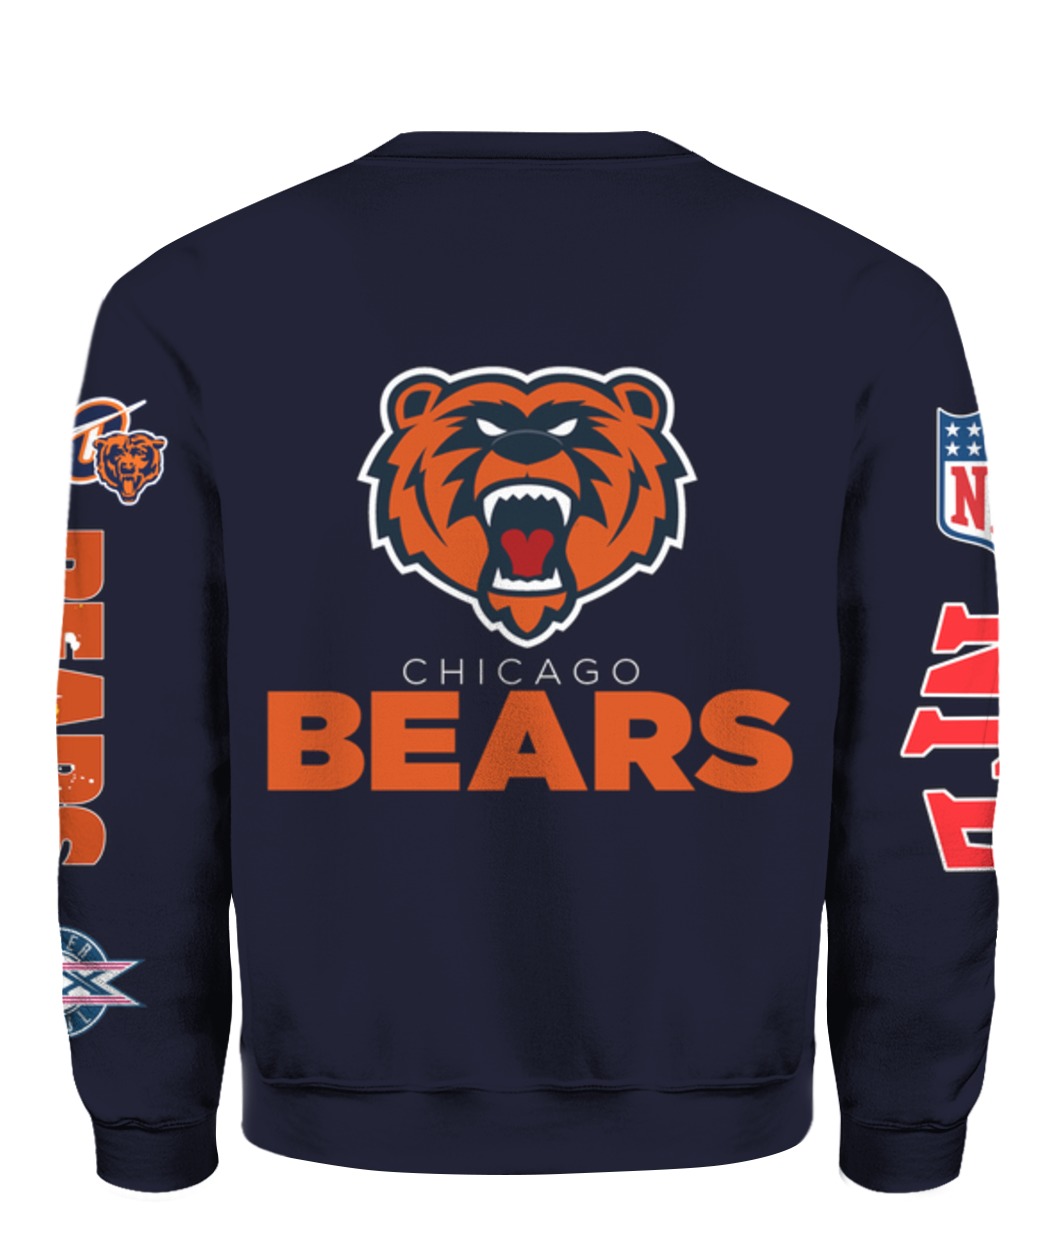 Chicago bears mascot all over print sweatshirt - back